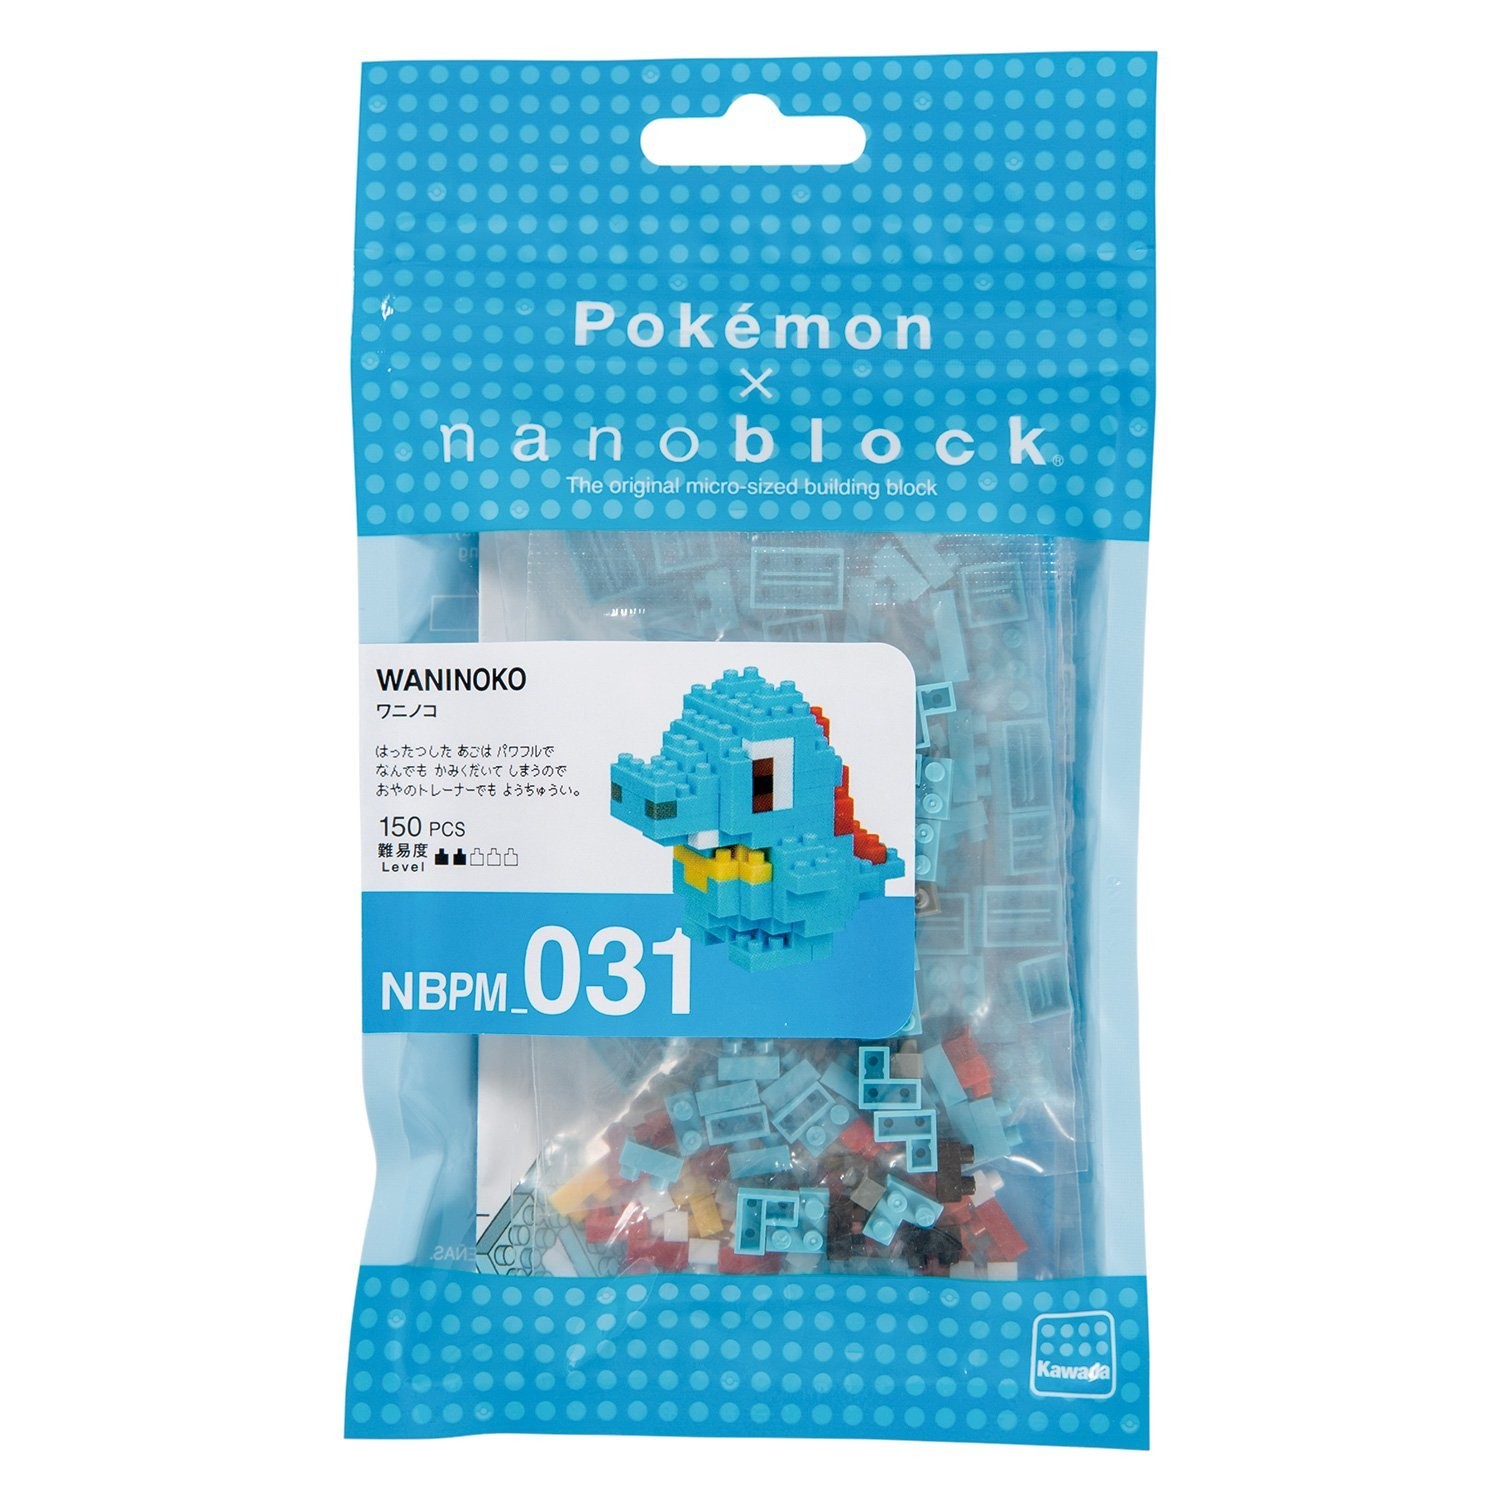 Totodile Pokemon Nanoblock Micro Sized Building Block COnstruction Toy NBPM031 